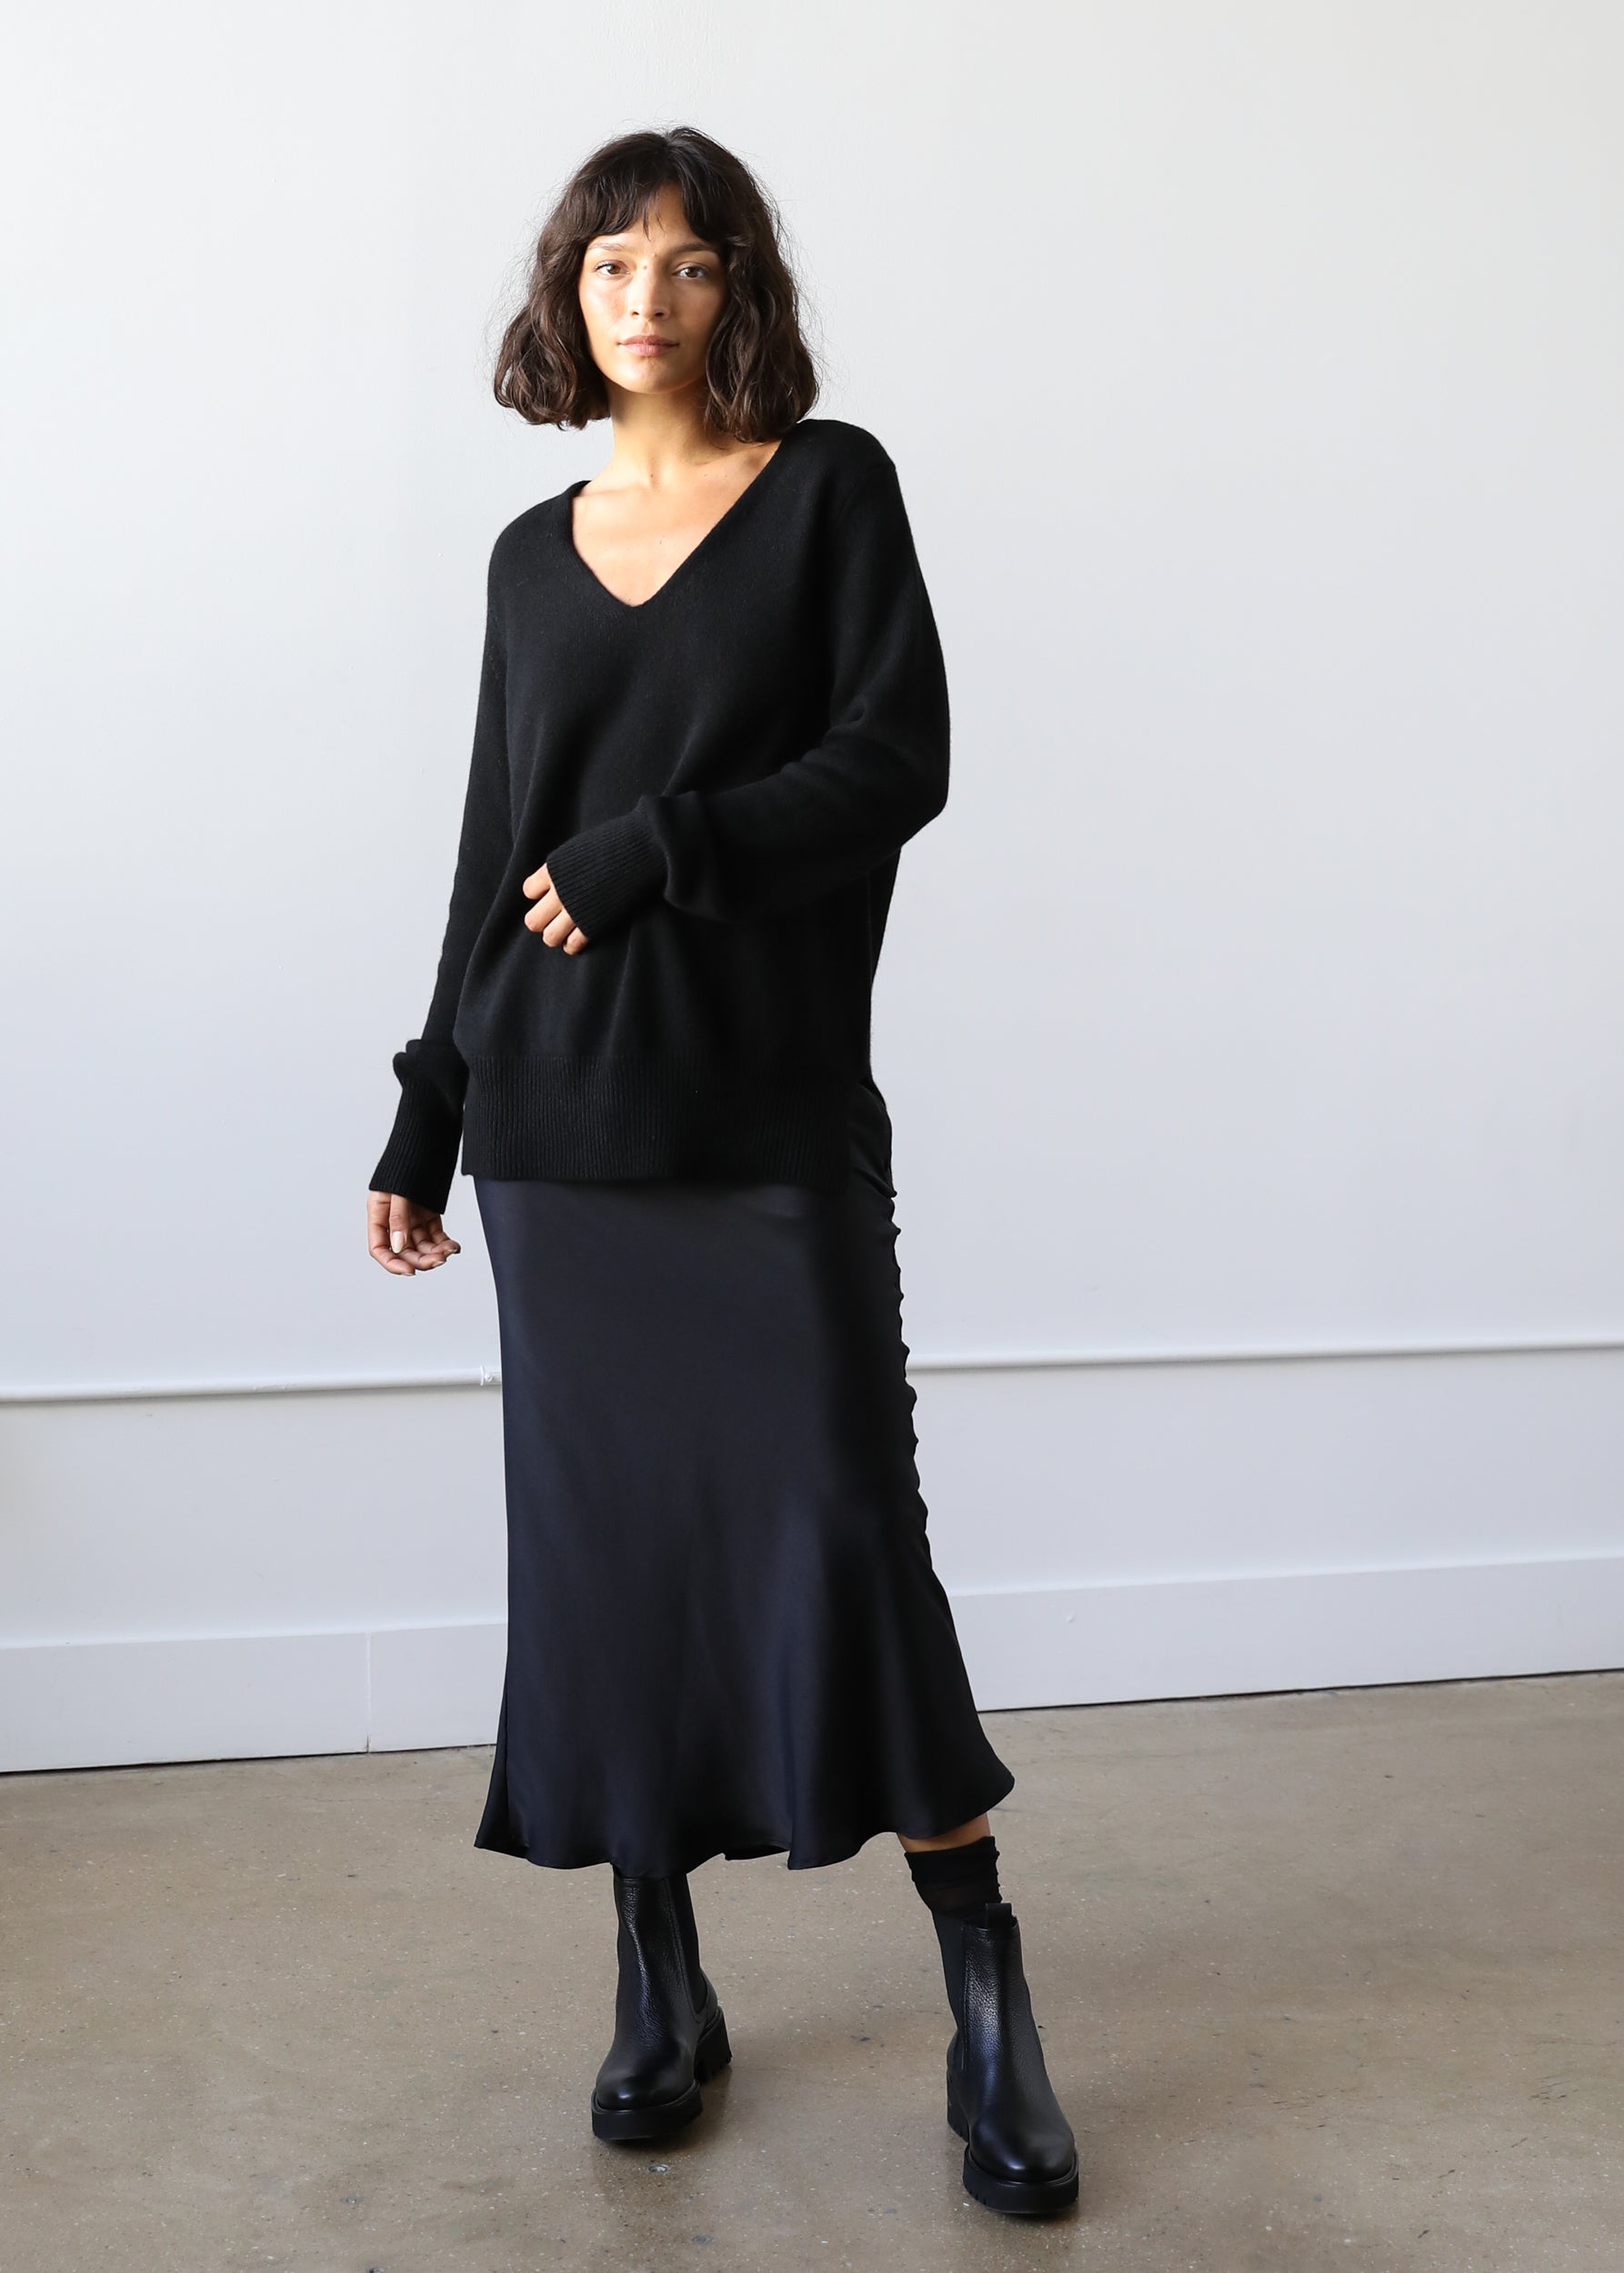 Estella NYC Sophia Skirt in Black Silk